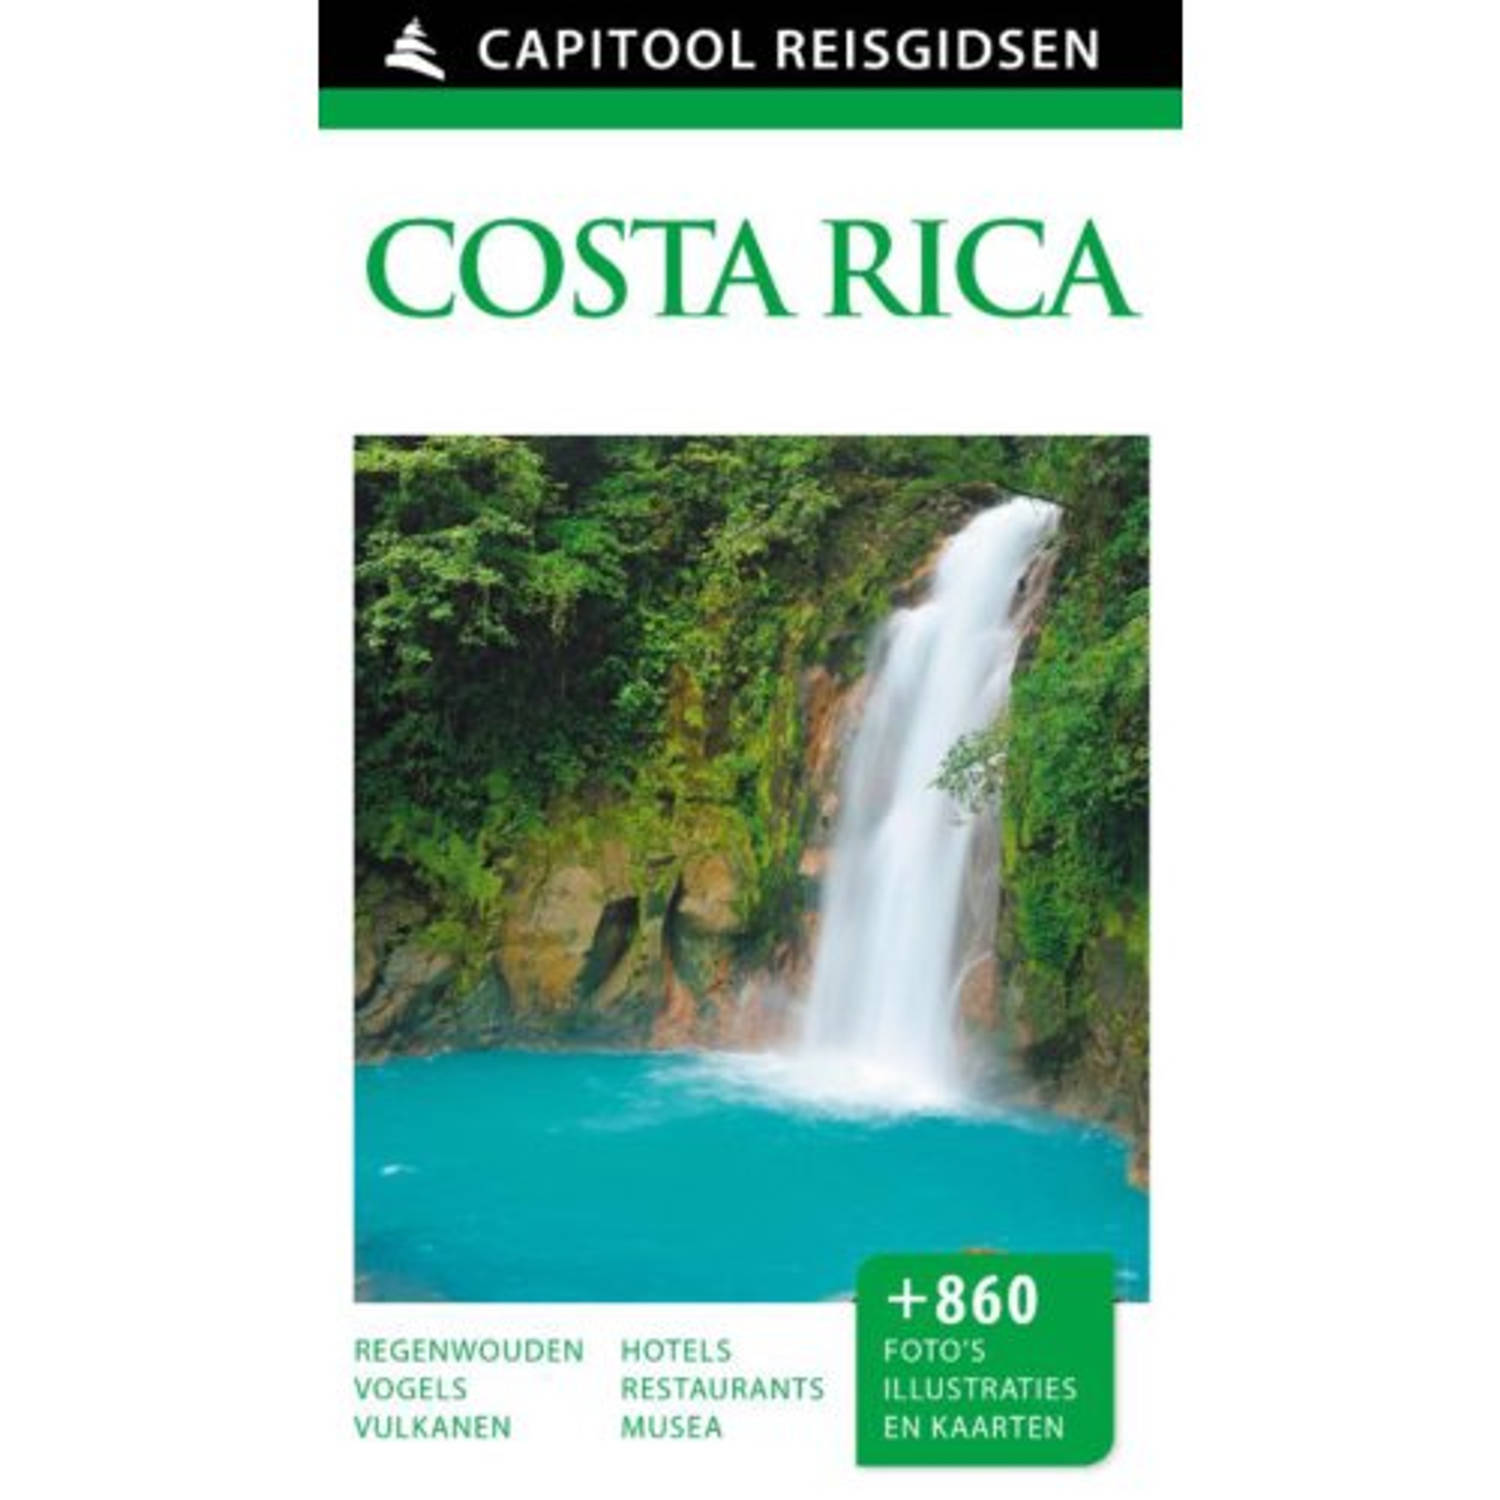 Costa Rica - Capitool Reisgidsen